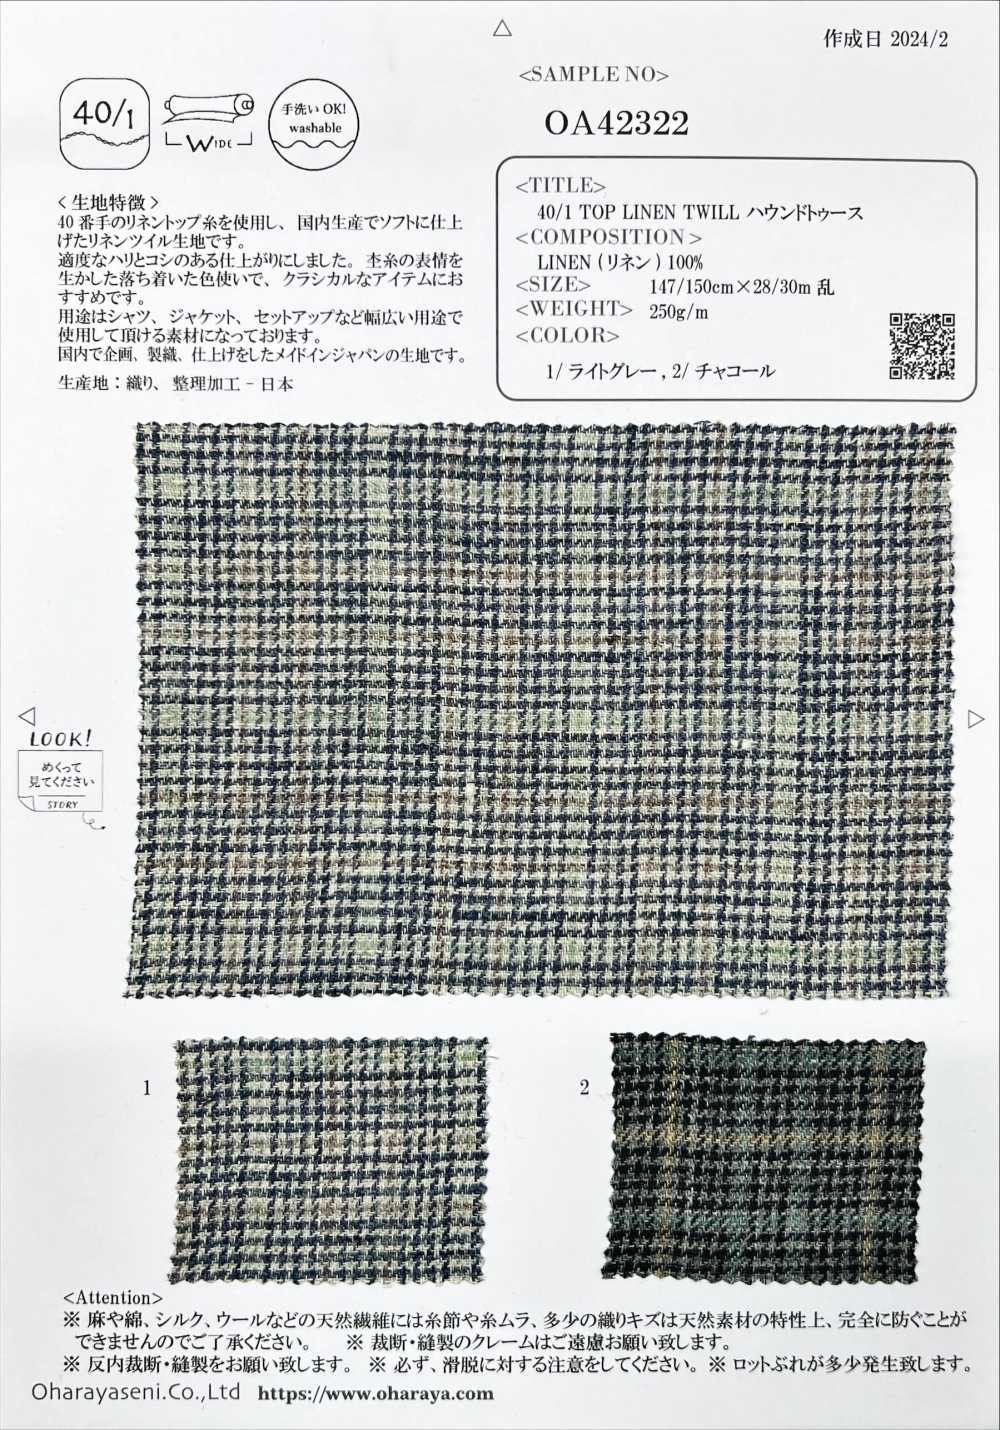 OA42322 HAUT LIN TWILL 40/1 Pied De Poule[Fabrication De Textile] Oharayaseni